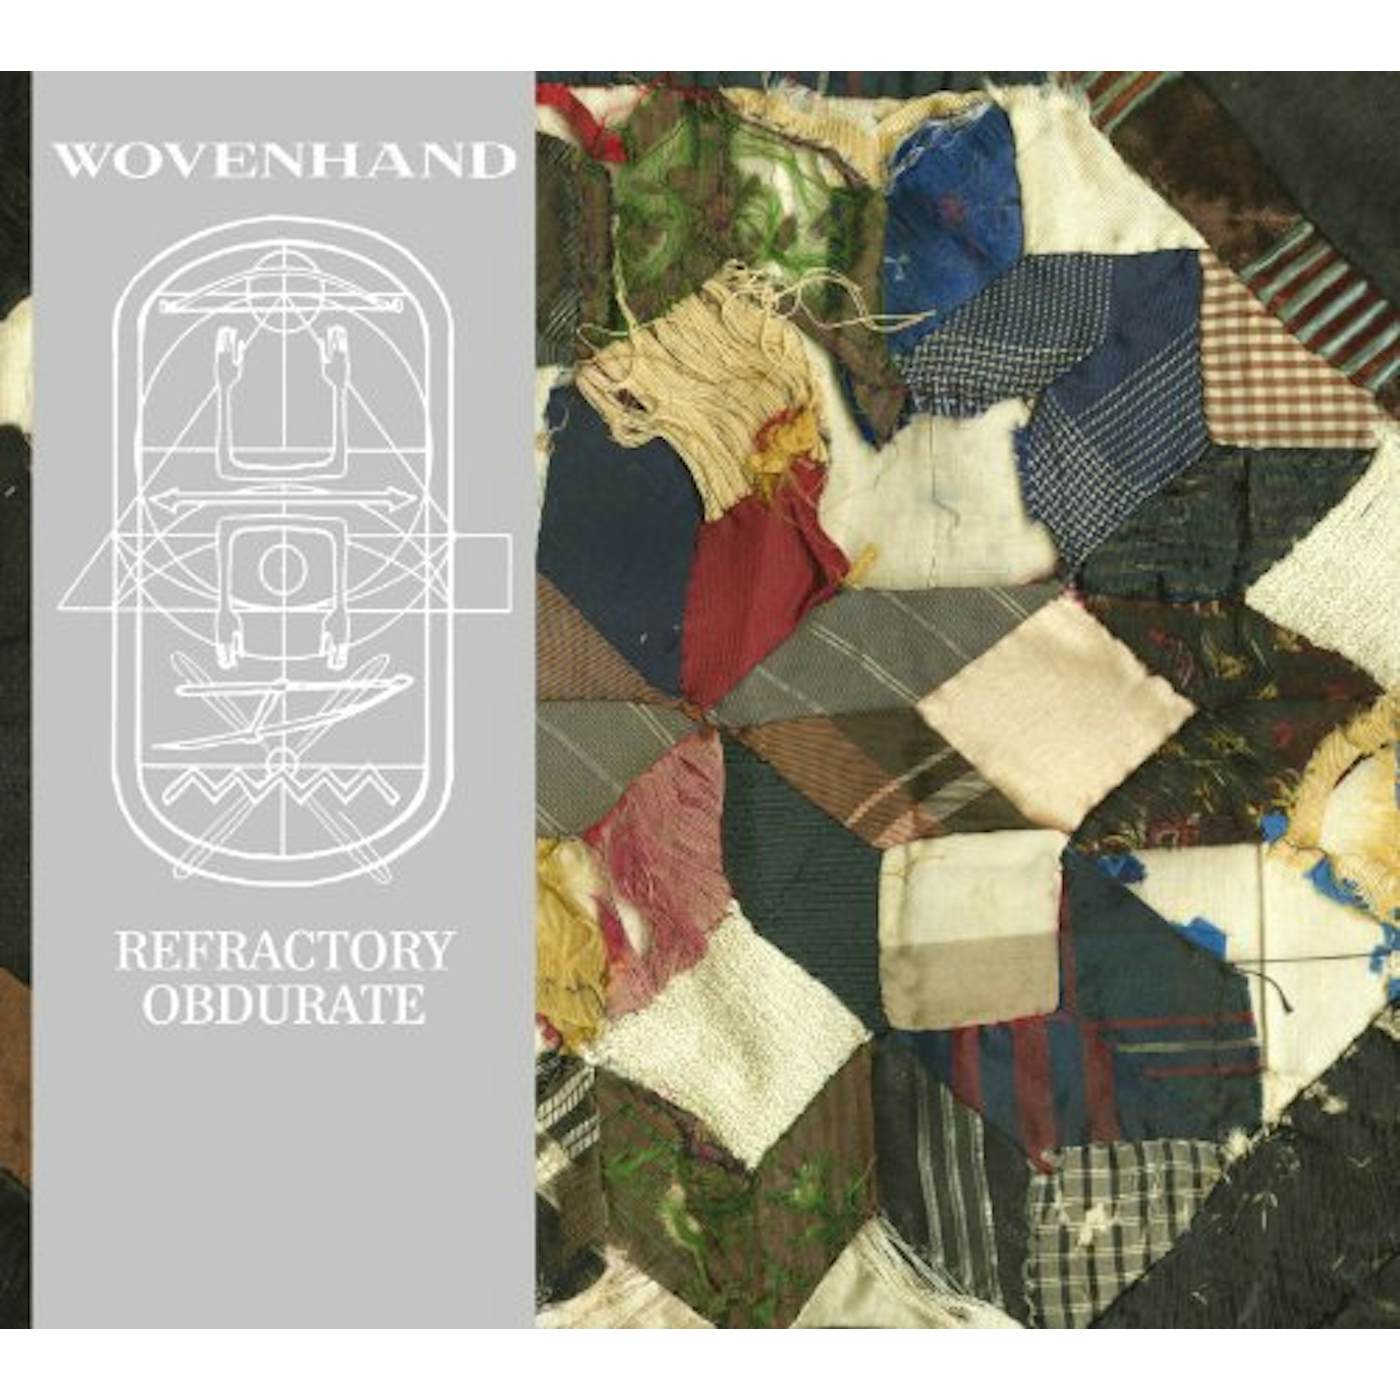 Wovenhand REFRECTORY OBDURATE Vinyl Record